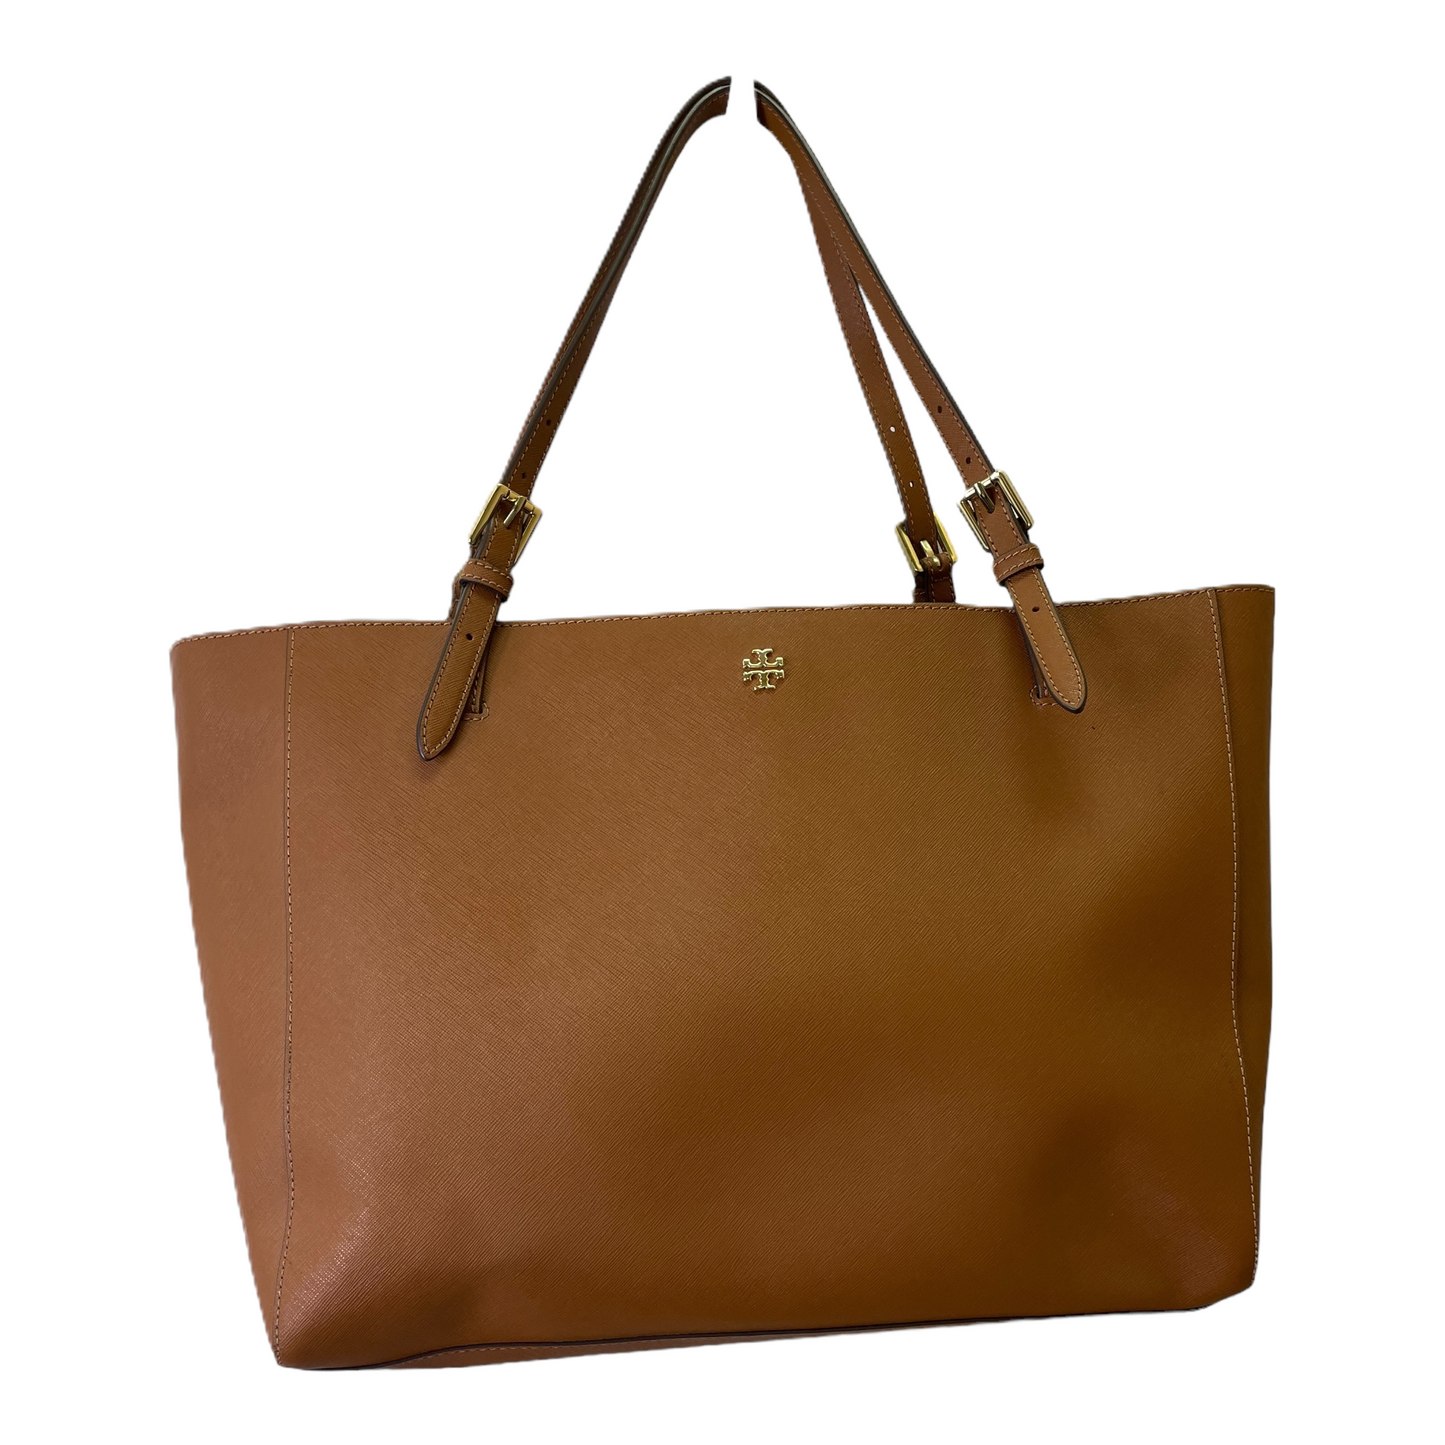 Handbag Designer By Tory Burch, Size: Large